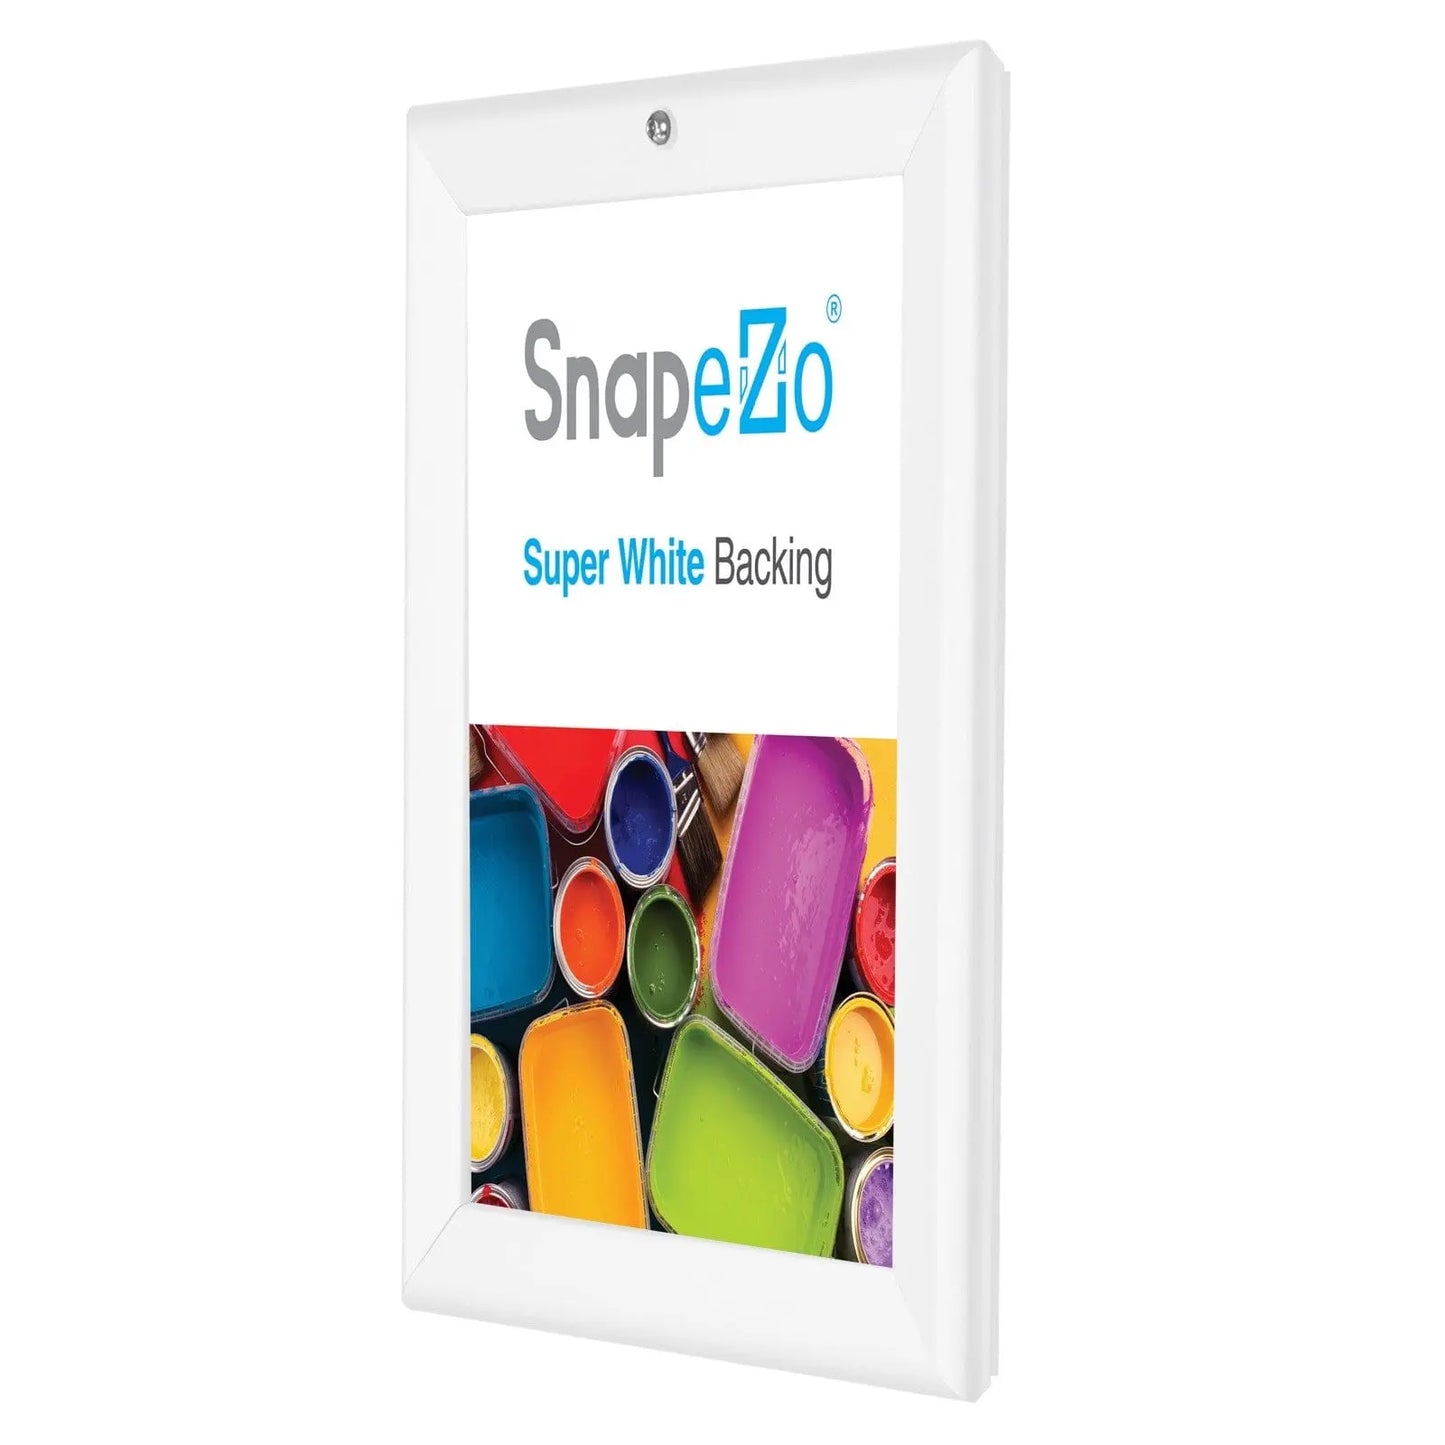 8.5x11 White SnapeZo® Locking - 1.25" Profile - Snap Frames Direct